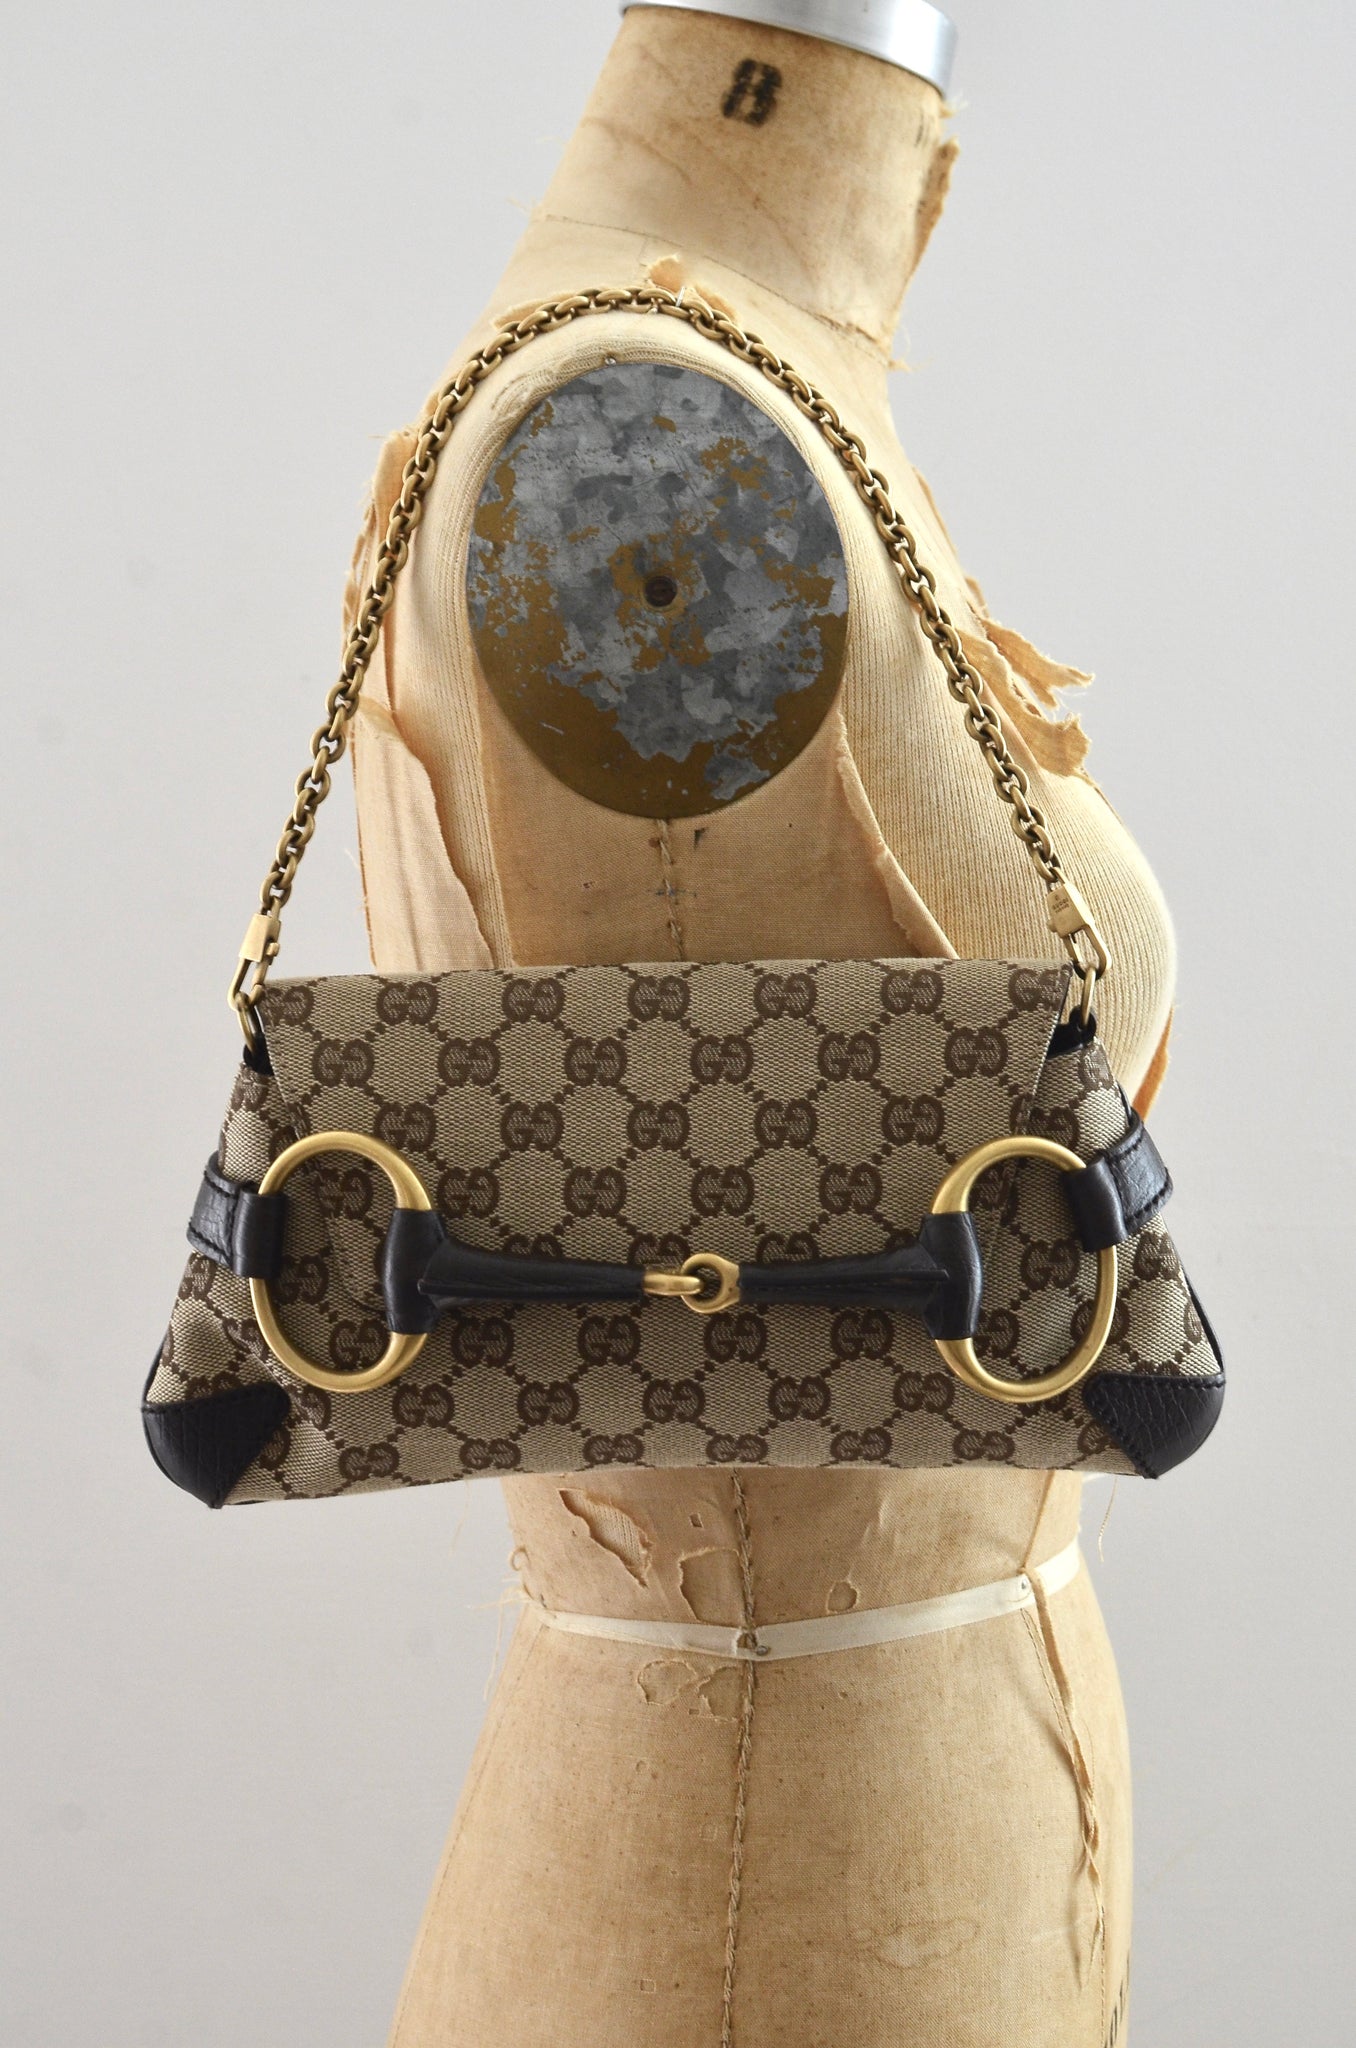 Gucci Authentic Very Rare Vintage Horsebit Baguette Shoulder Bag by Tom Ford